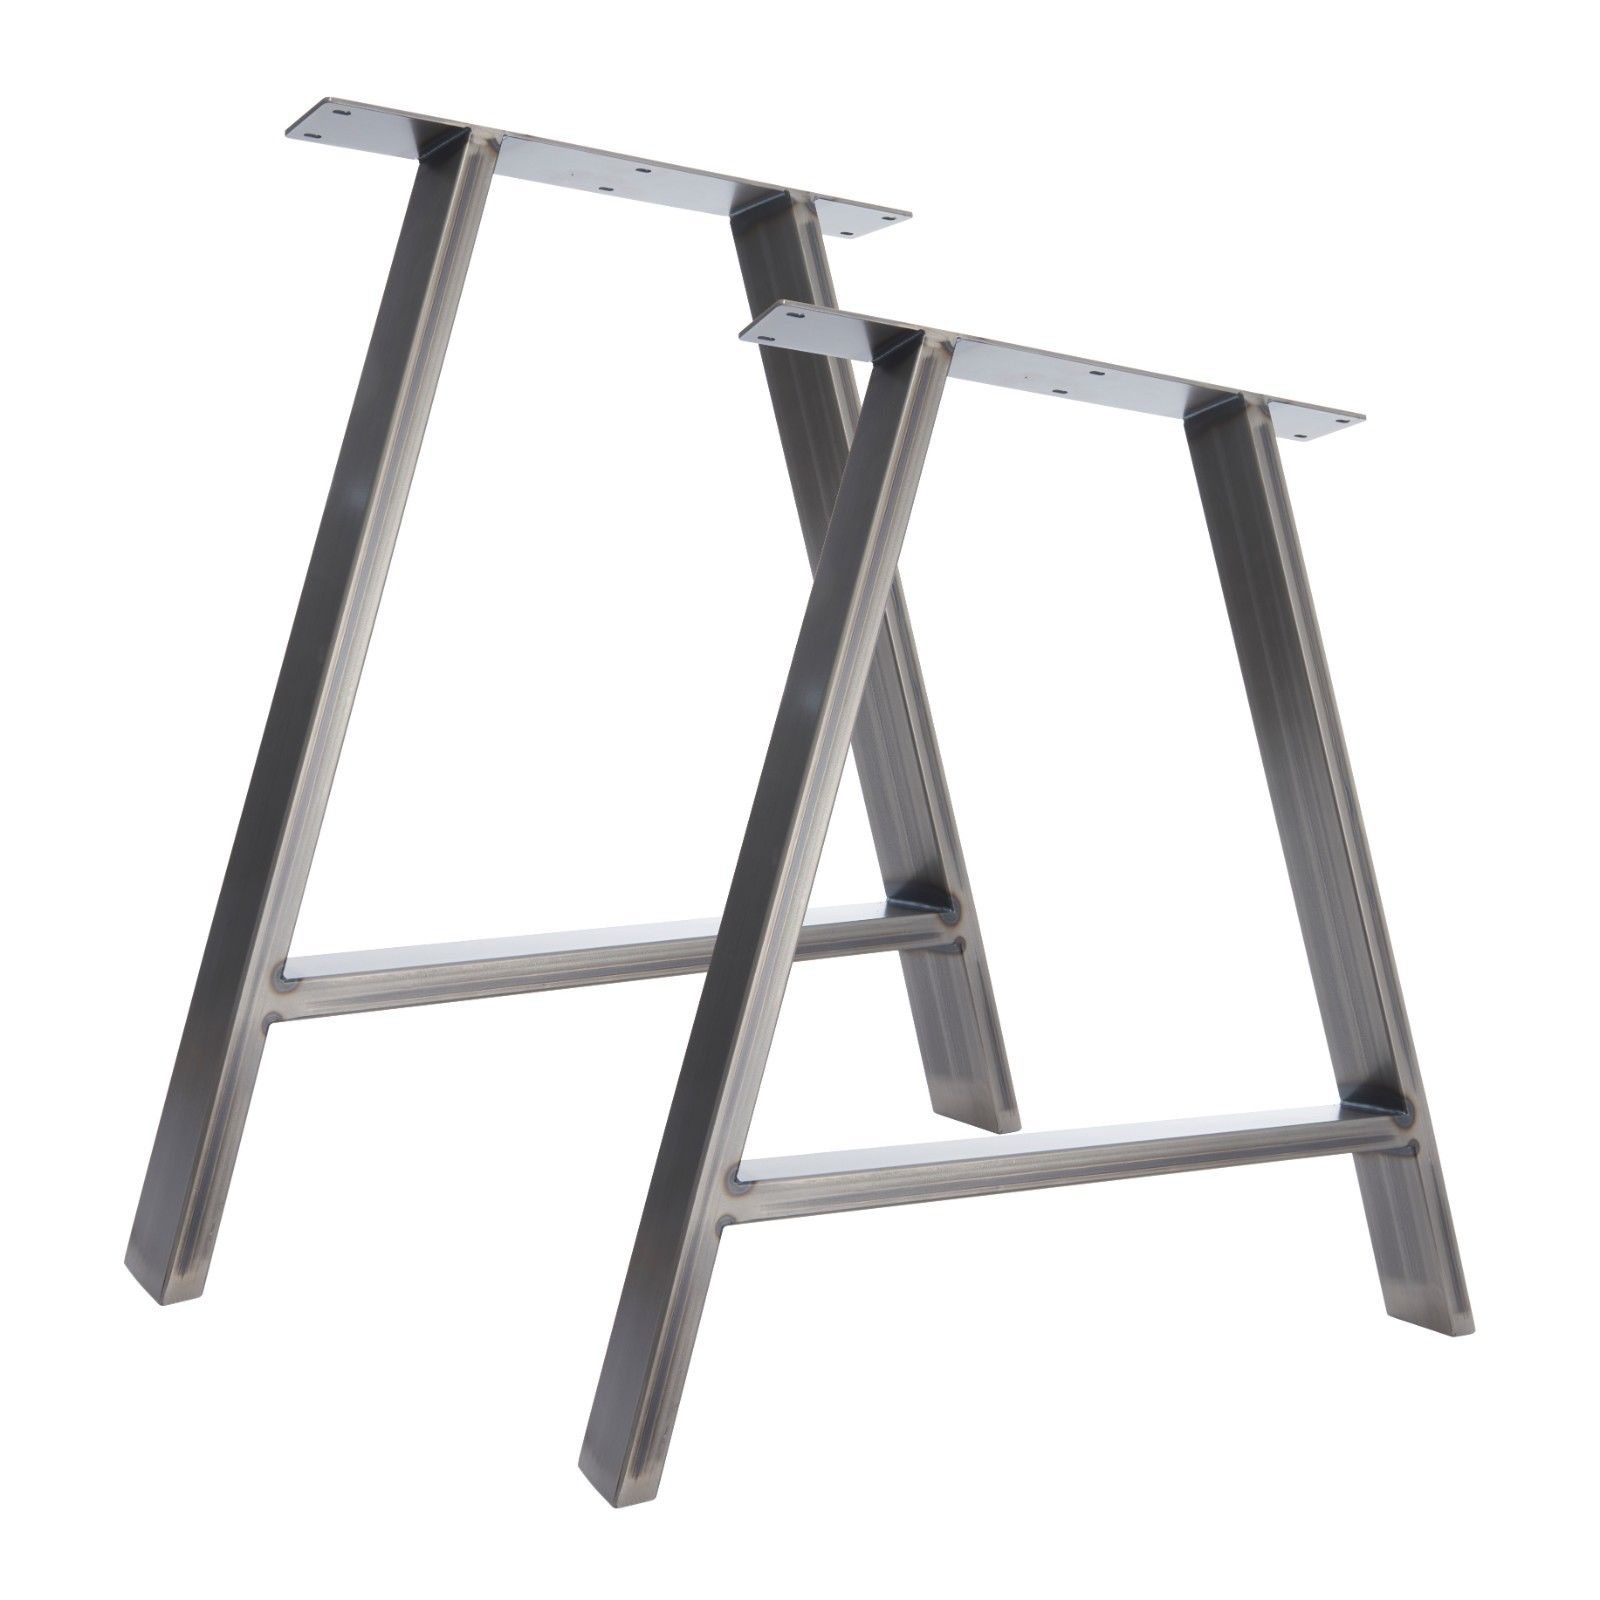 Industrial-Splayed-A-Design-shape-Steel-Table (2).jpg